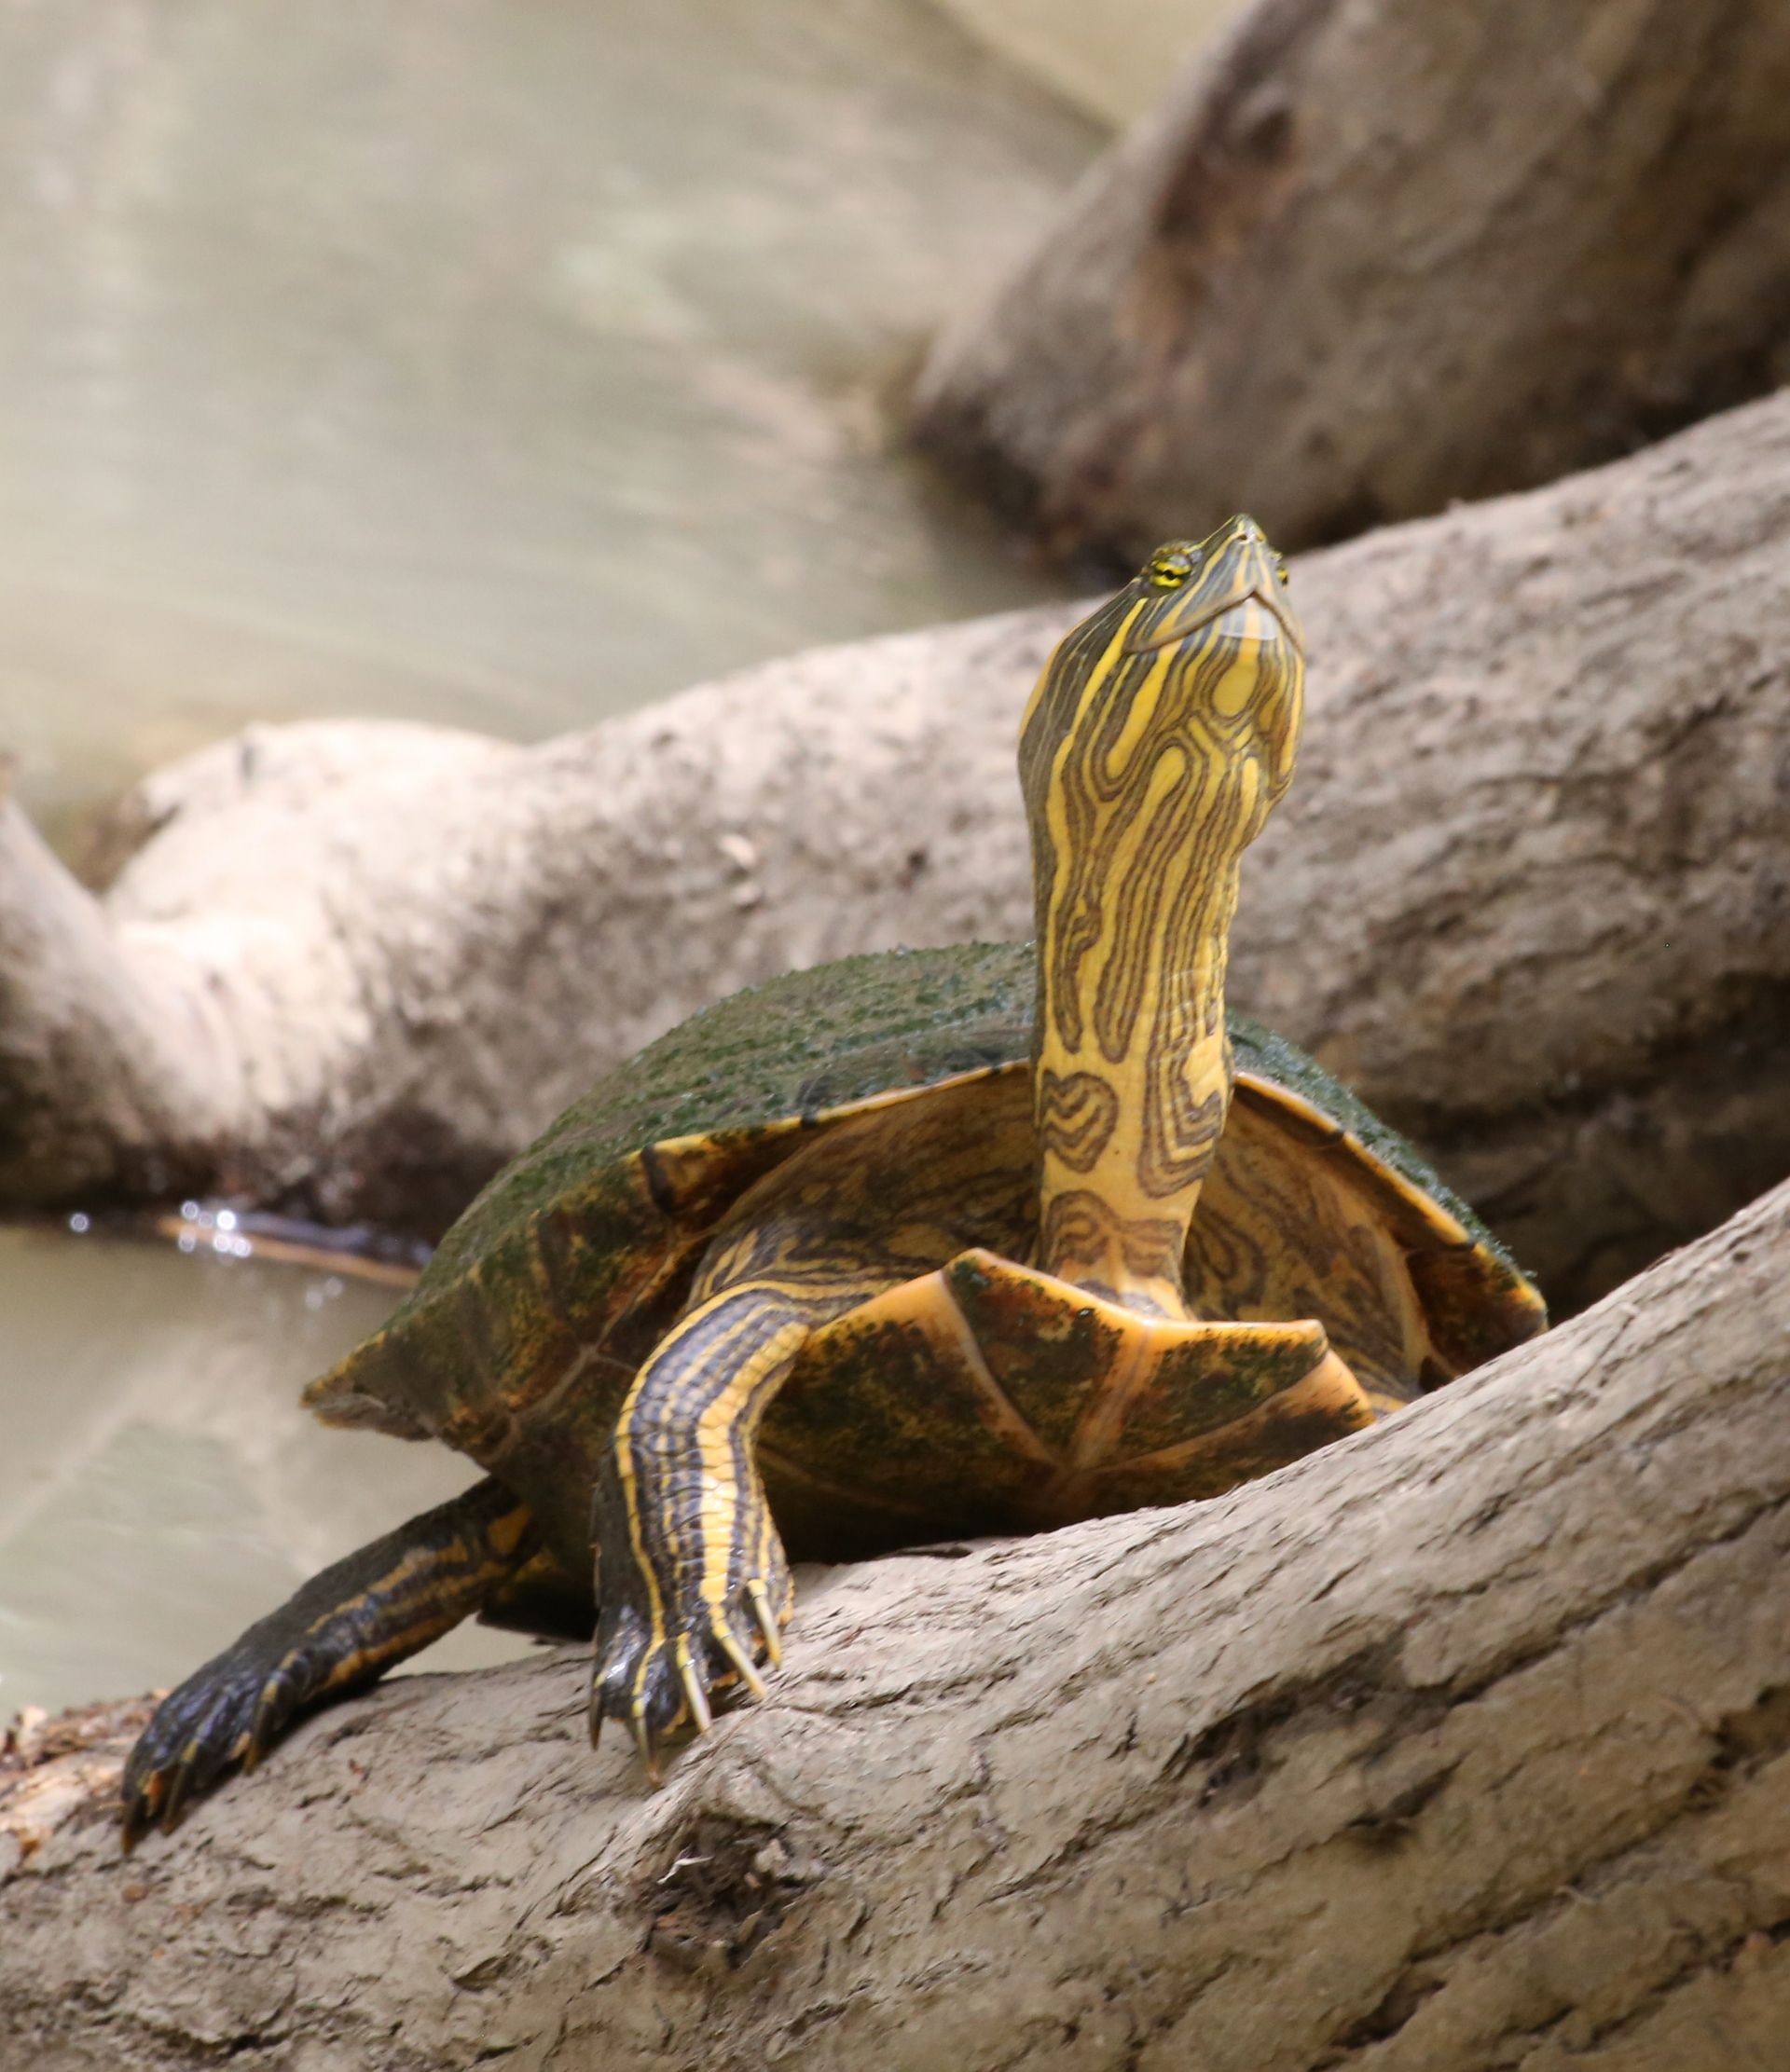 A portrait of a turtle on a log.